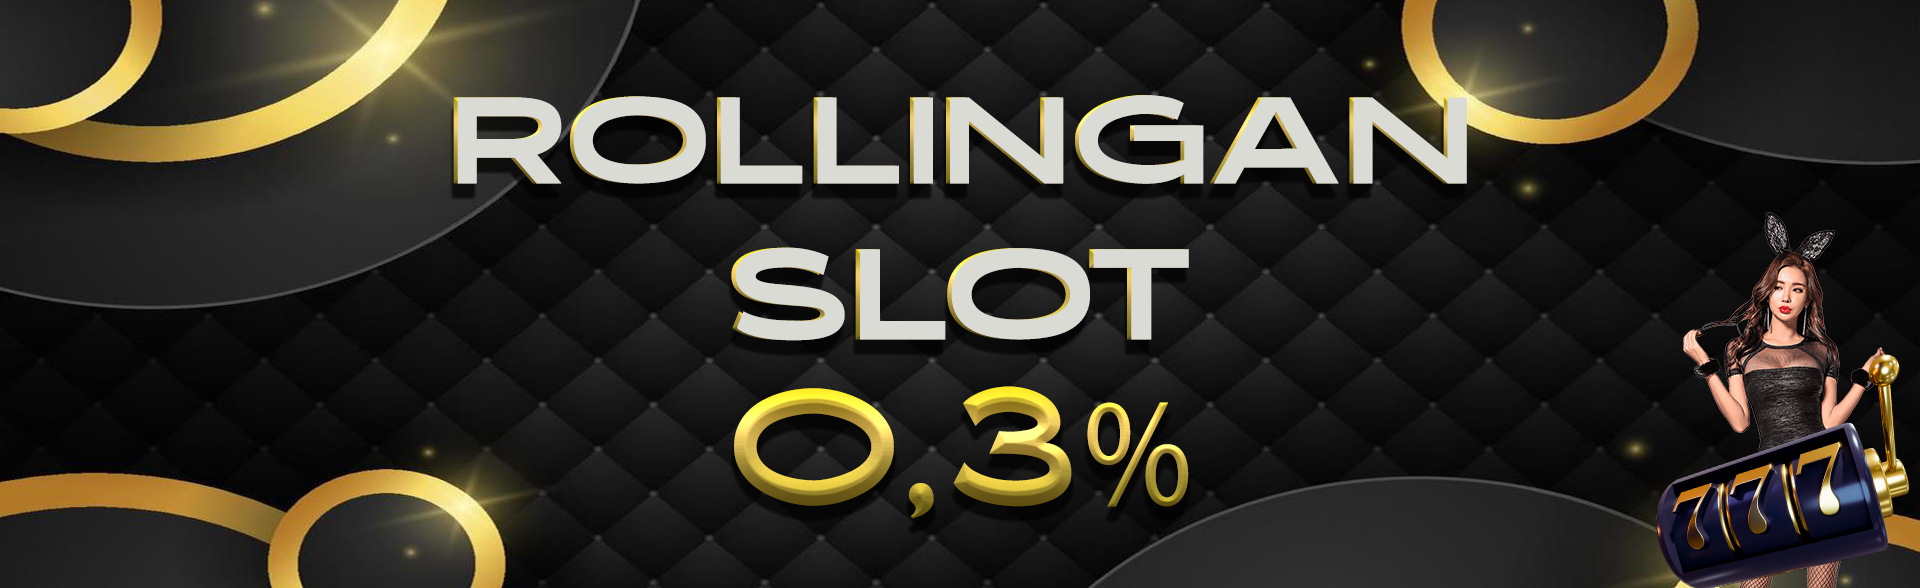 Rollingan Slot